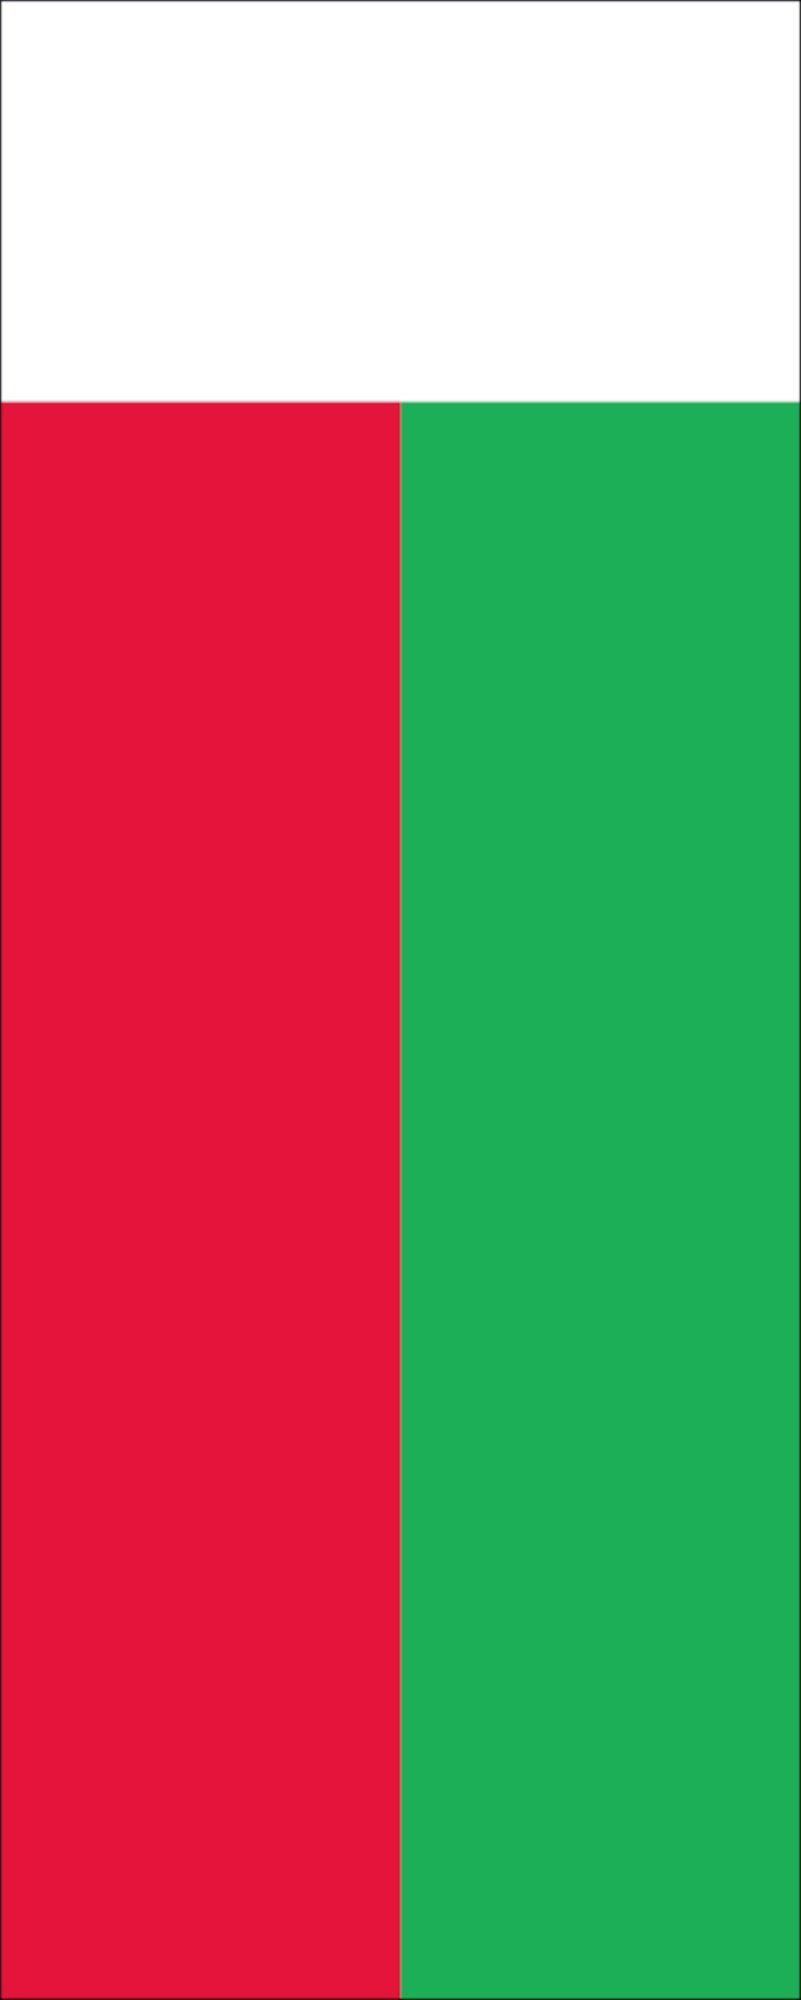 110 Flagge Flagge flaggenmeer g/m² Madagaskar Hochformat